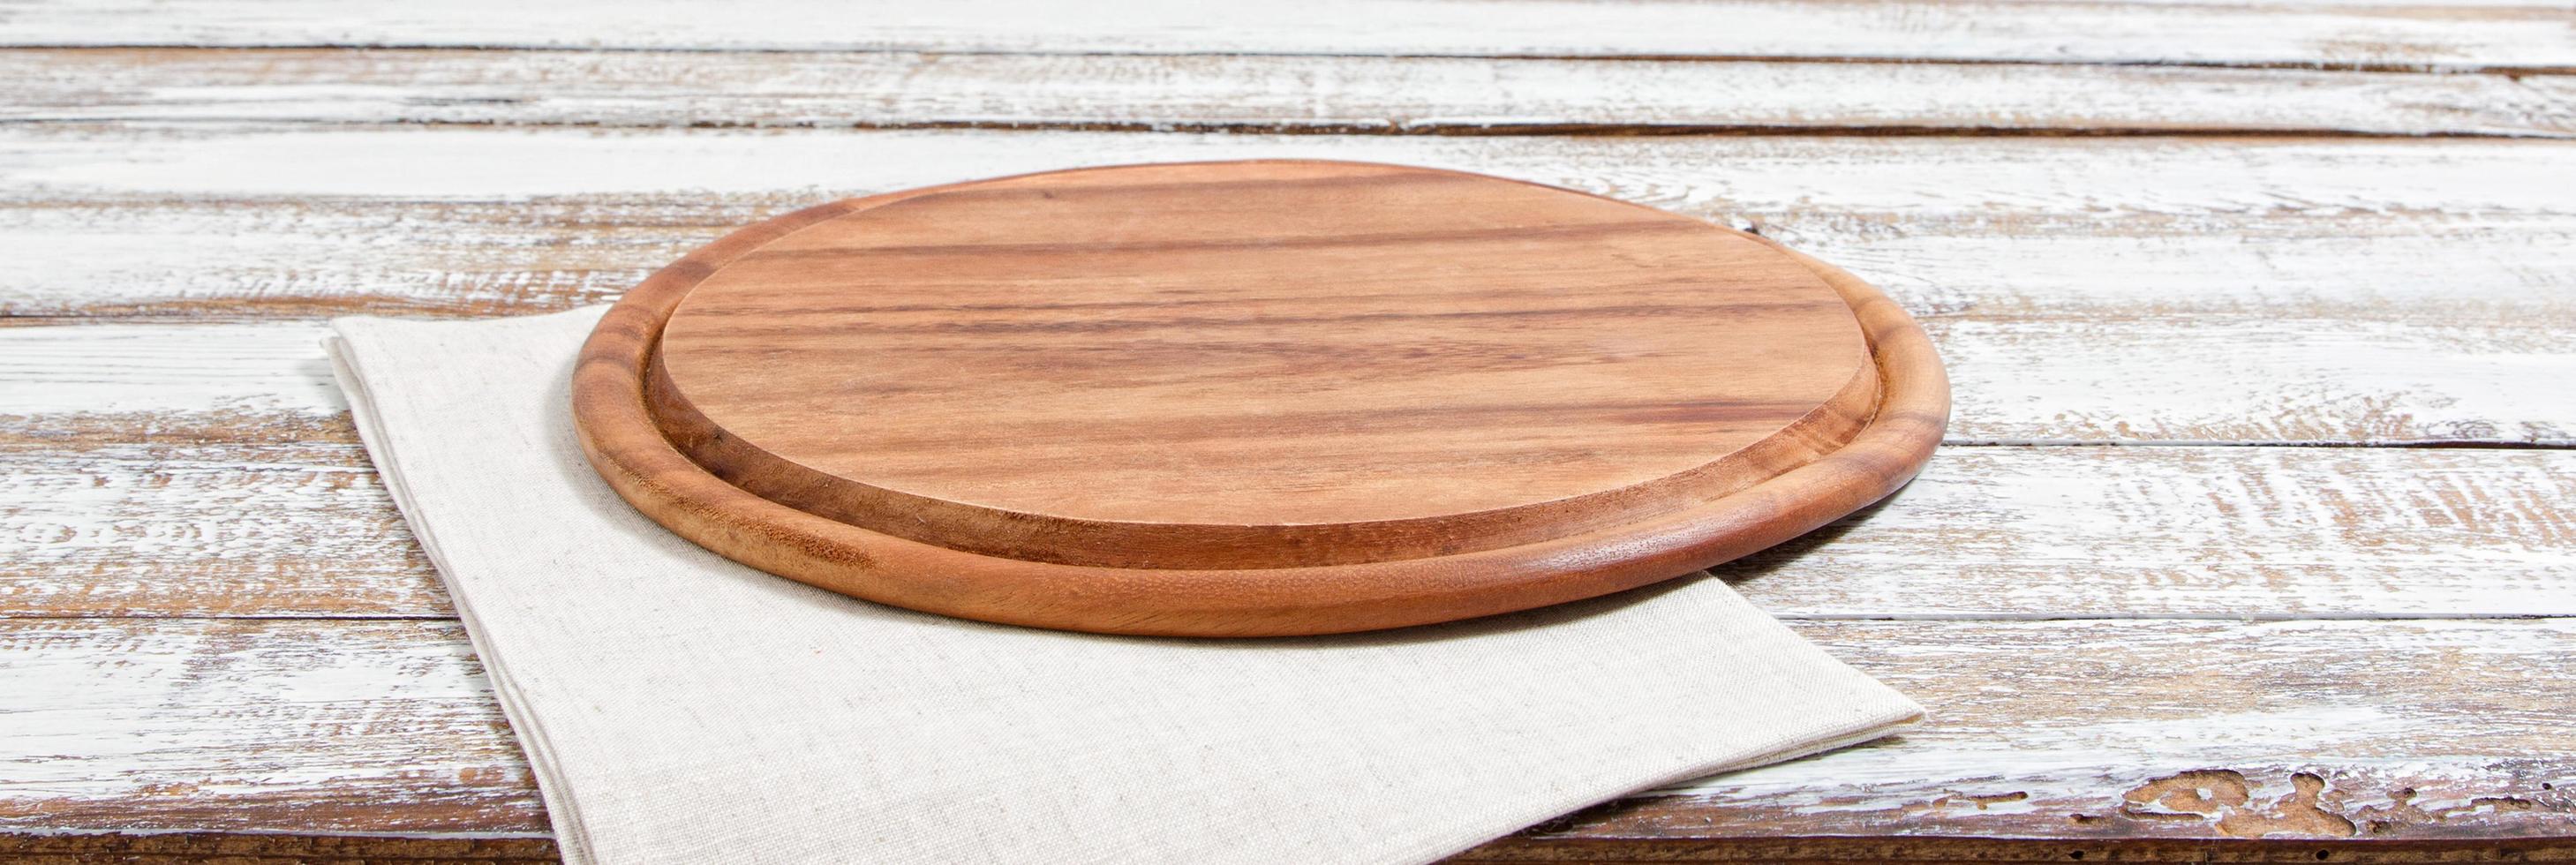 tabuleiro de pizza vazio na mesa de madeira vazia com toalha de mesa, guardanapo - vista superior foto